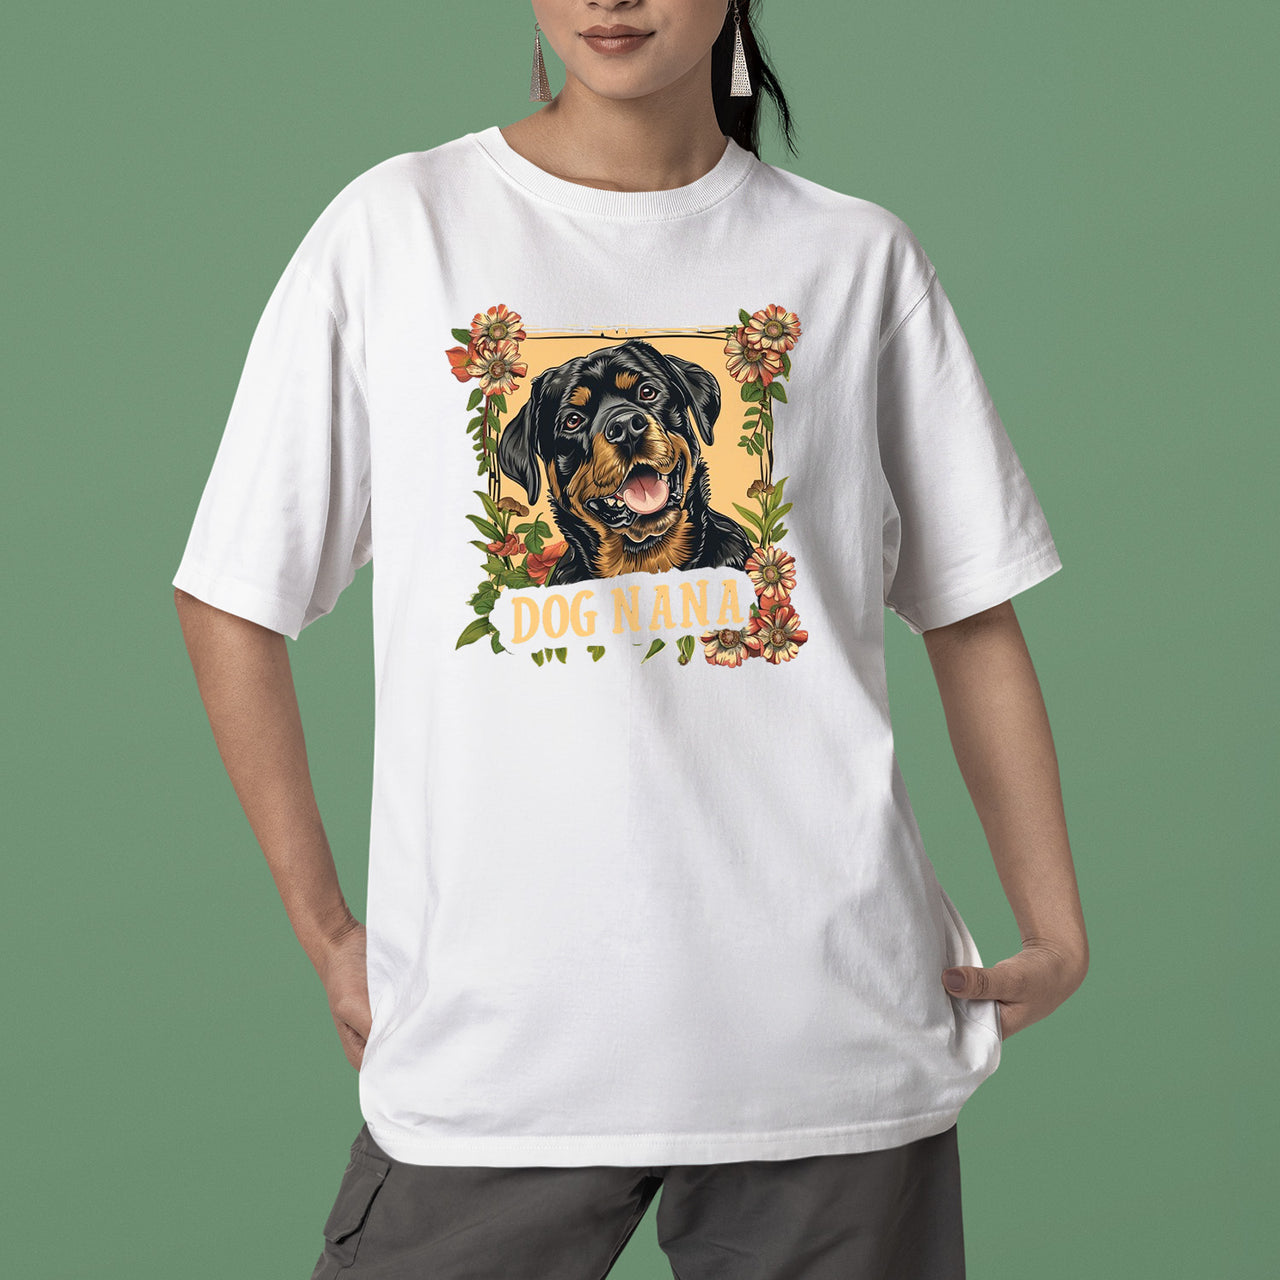 Rottweiler Dog T-shirt, Pet Lover Shirt, Dog Lover Shirt, Dog Nana T-Shirt, Dog Owner Shirt, Gift For Dog Grandma, Funny Dog Shirts, Women Dog T-Shirt, Mother's Day Gift, Dog Lover Wife Gifts, Dog Shirt